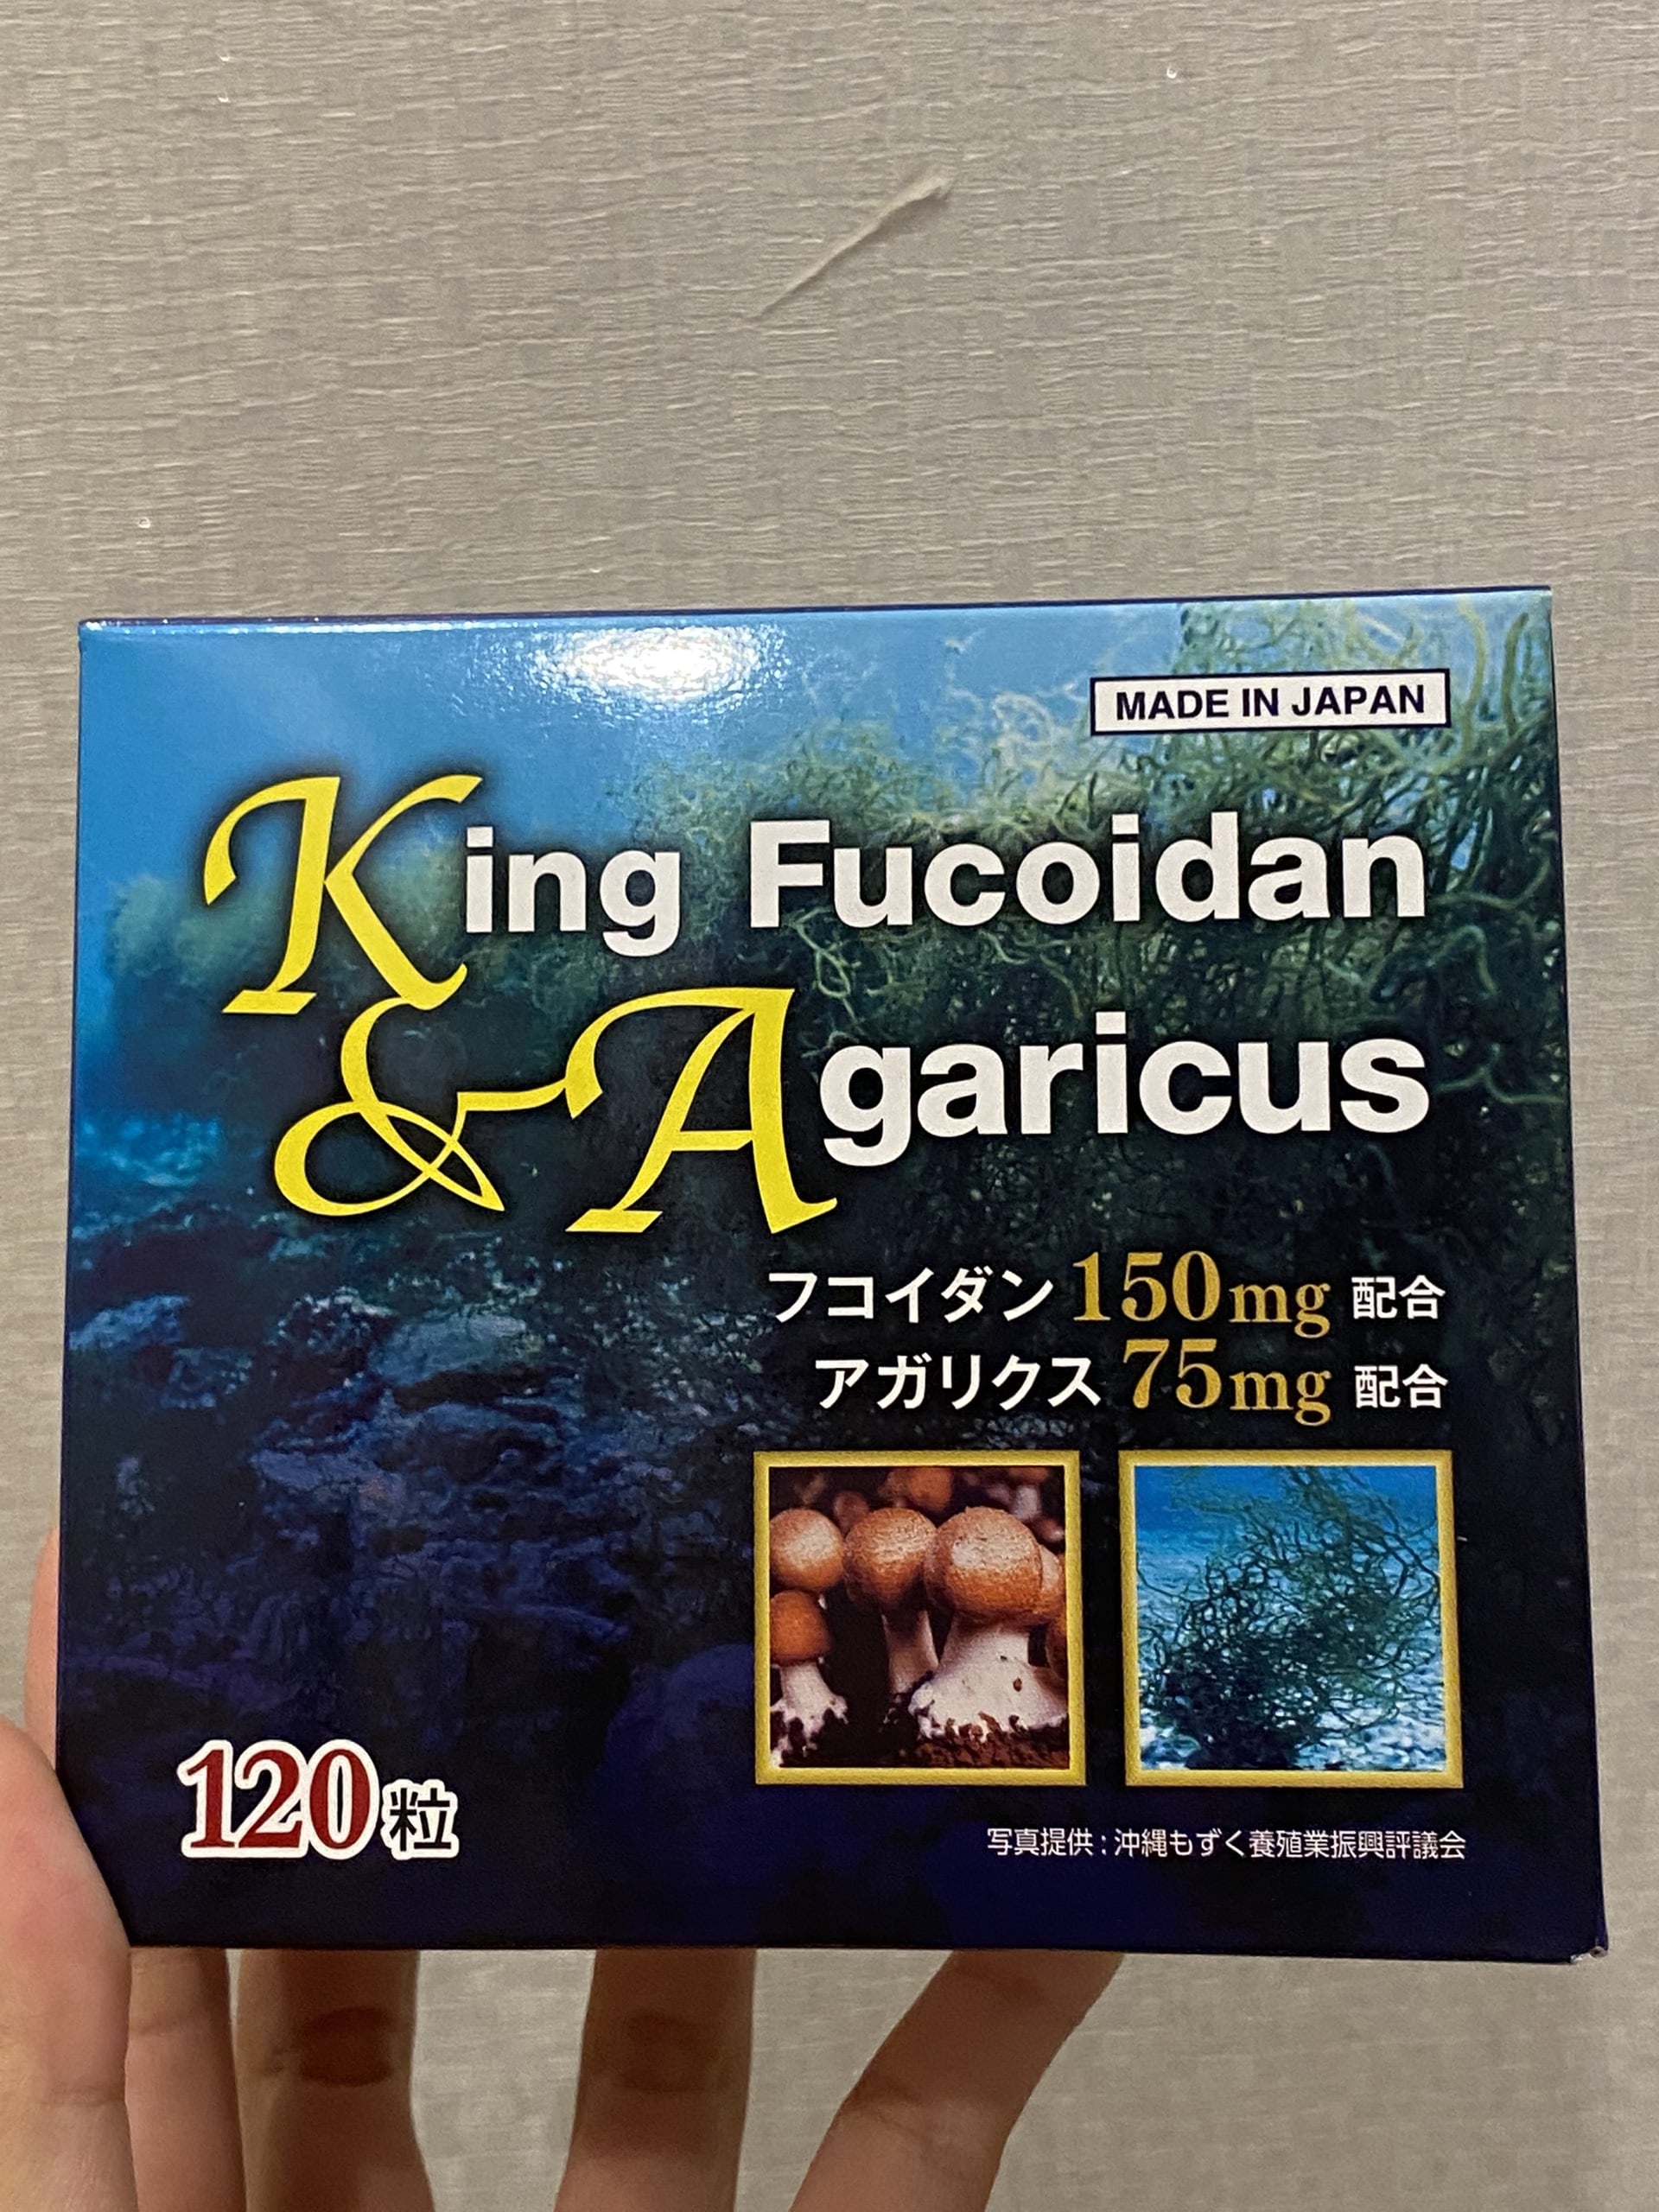 KING FUCOIDAN & AGARICUS 120 viên